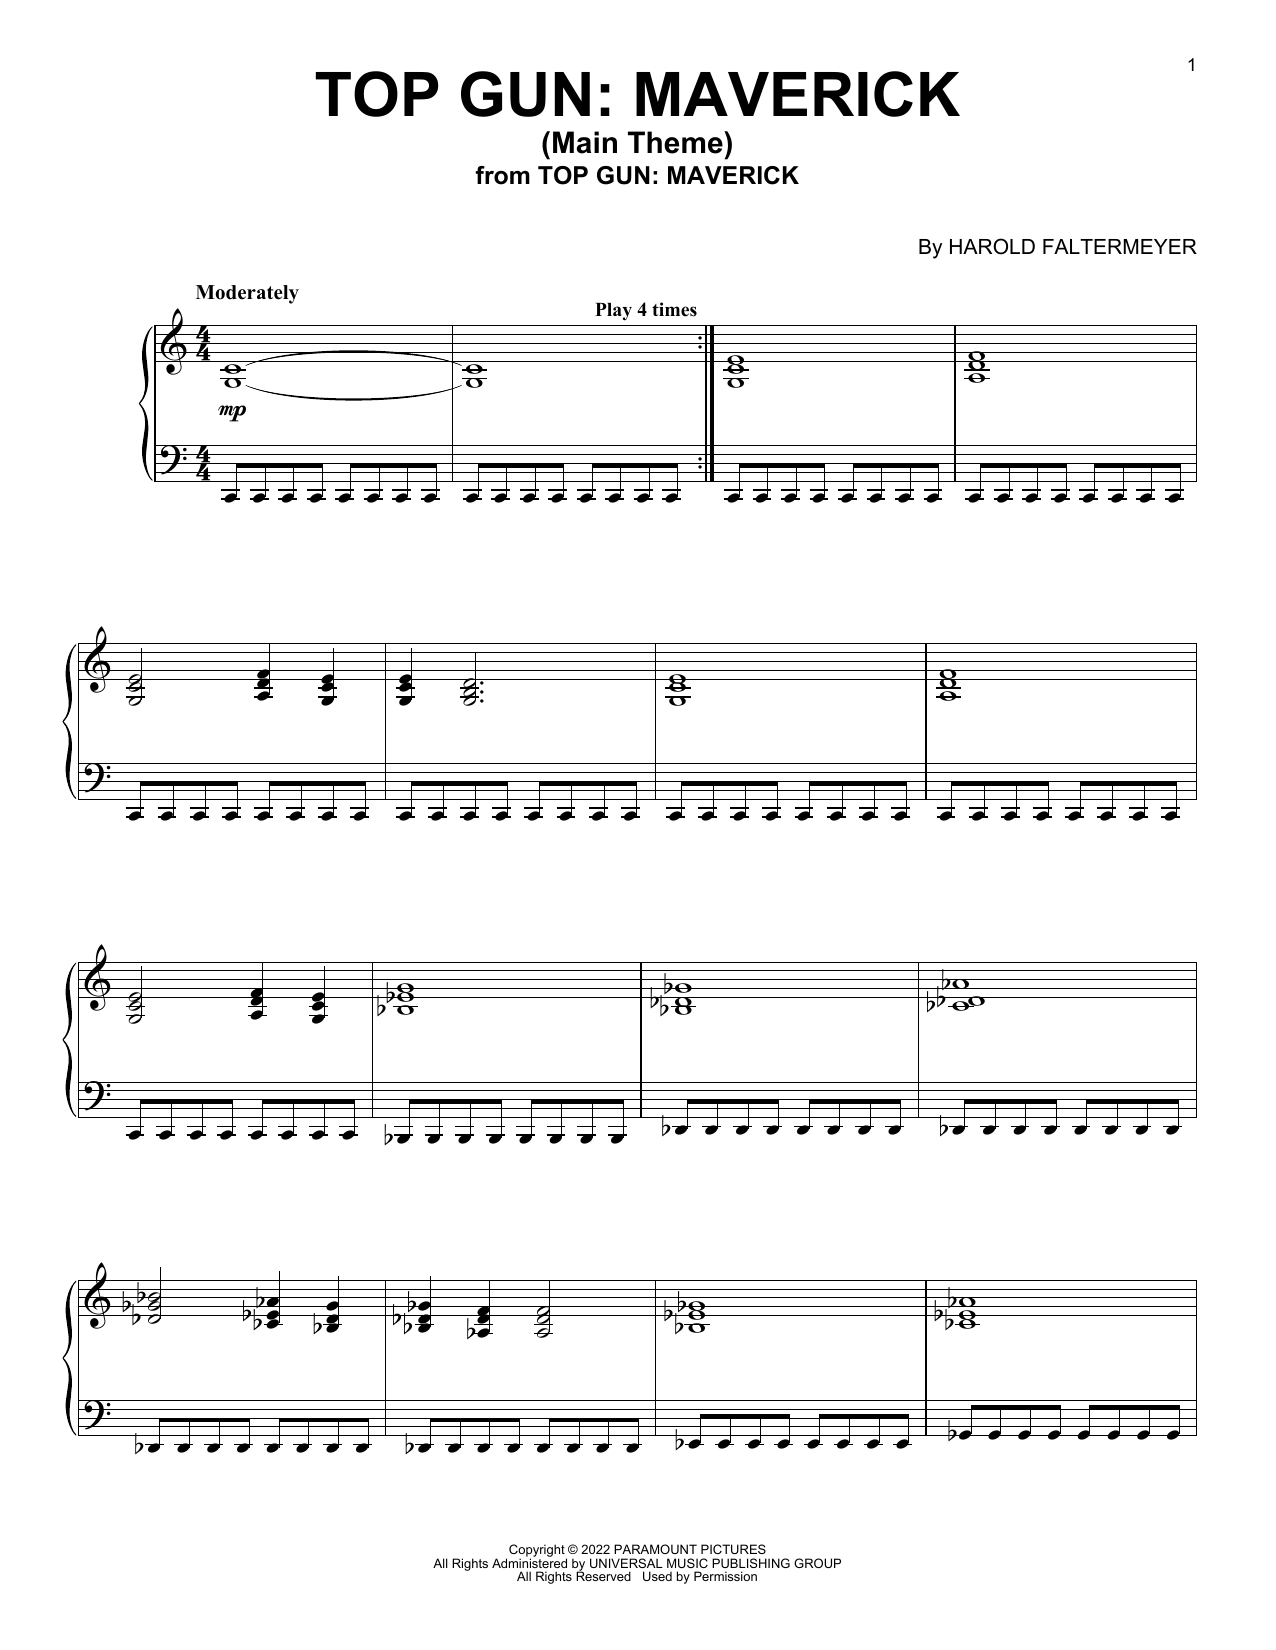 Download Hans Zimmer, Harold Faltermeyer, Lady Gaga & Lorne Balfe Top Gun: Maverick (Main Theme) Sheet Music and learn how to play Piano Solo PDF digital score in minutes